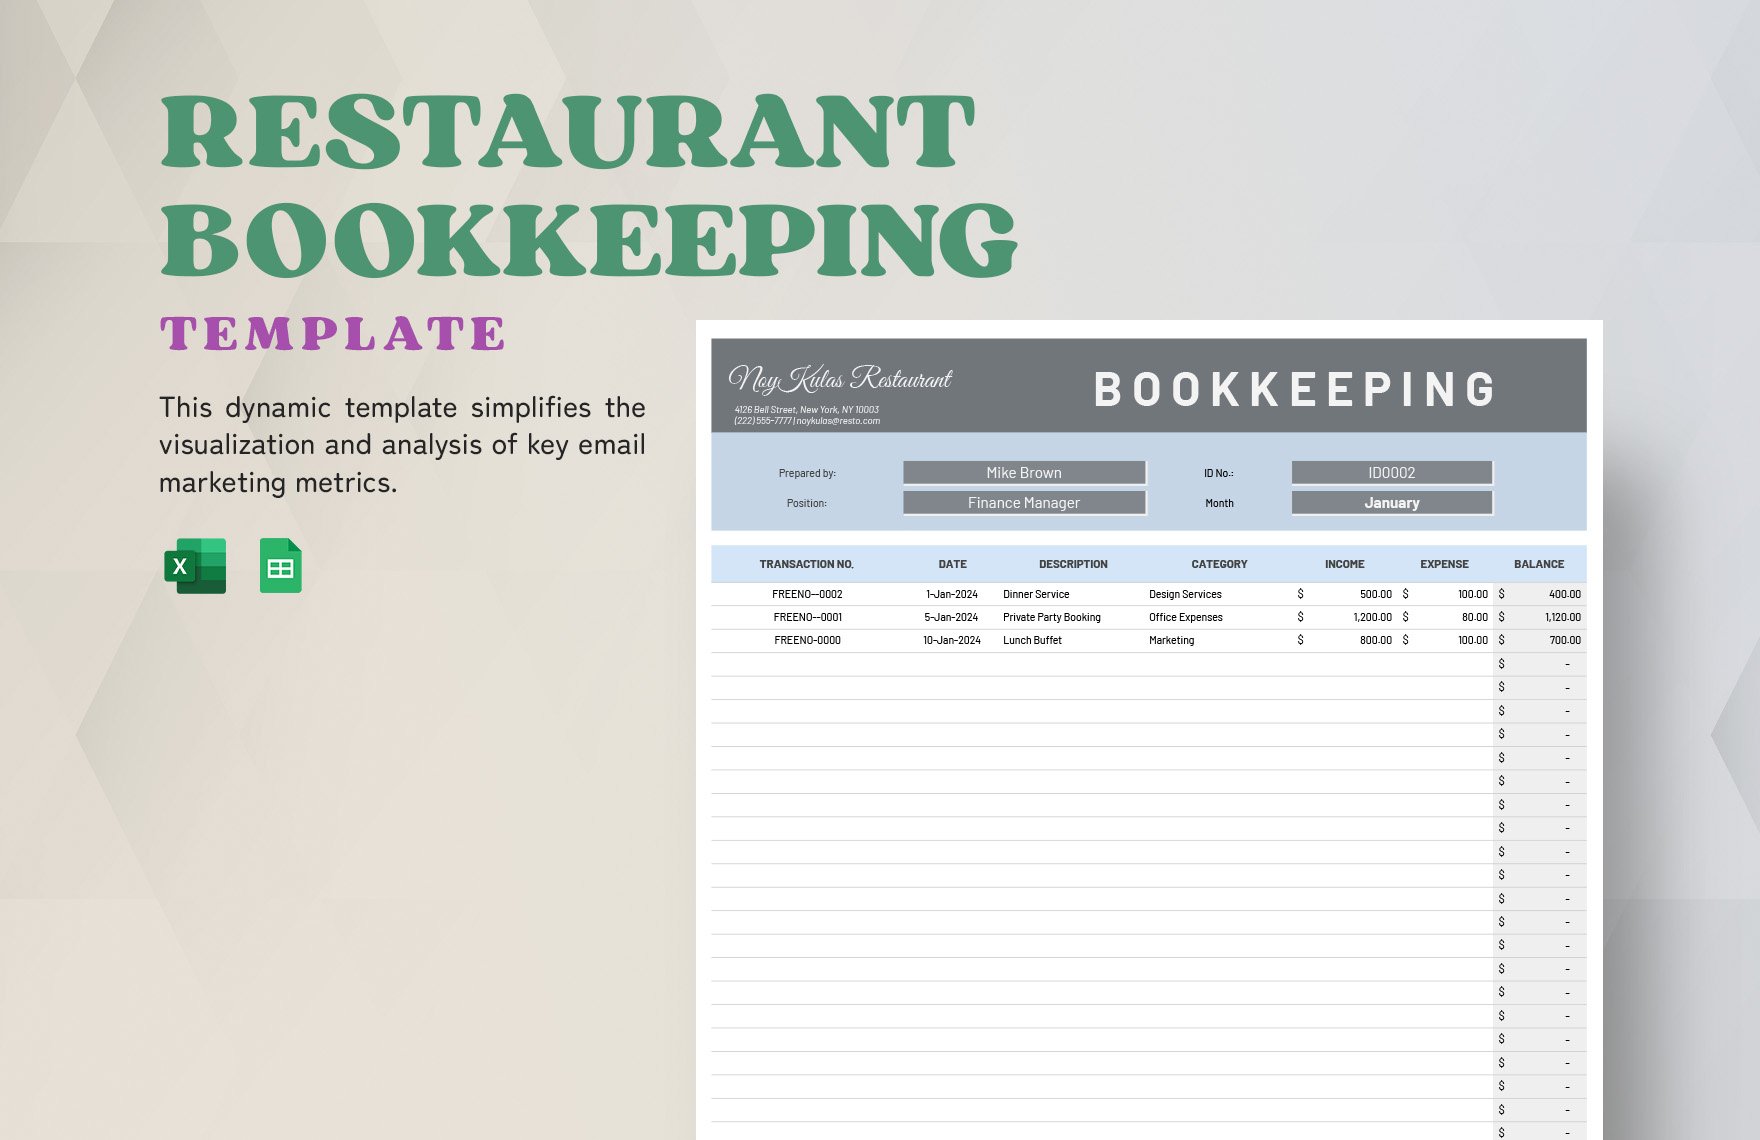 Restaurant Bookkeeping Template